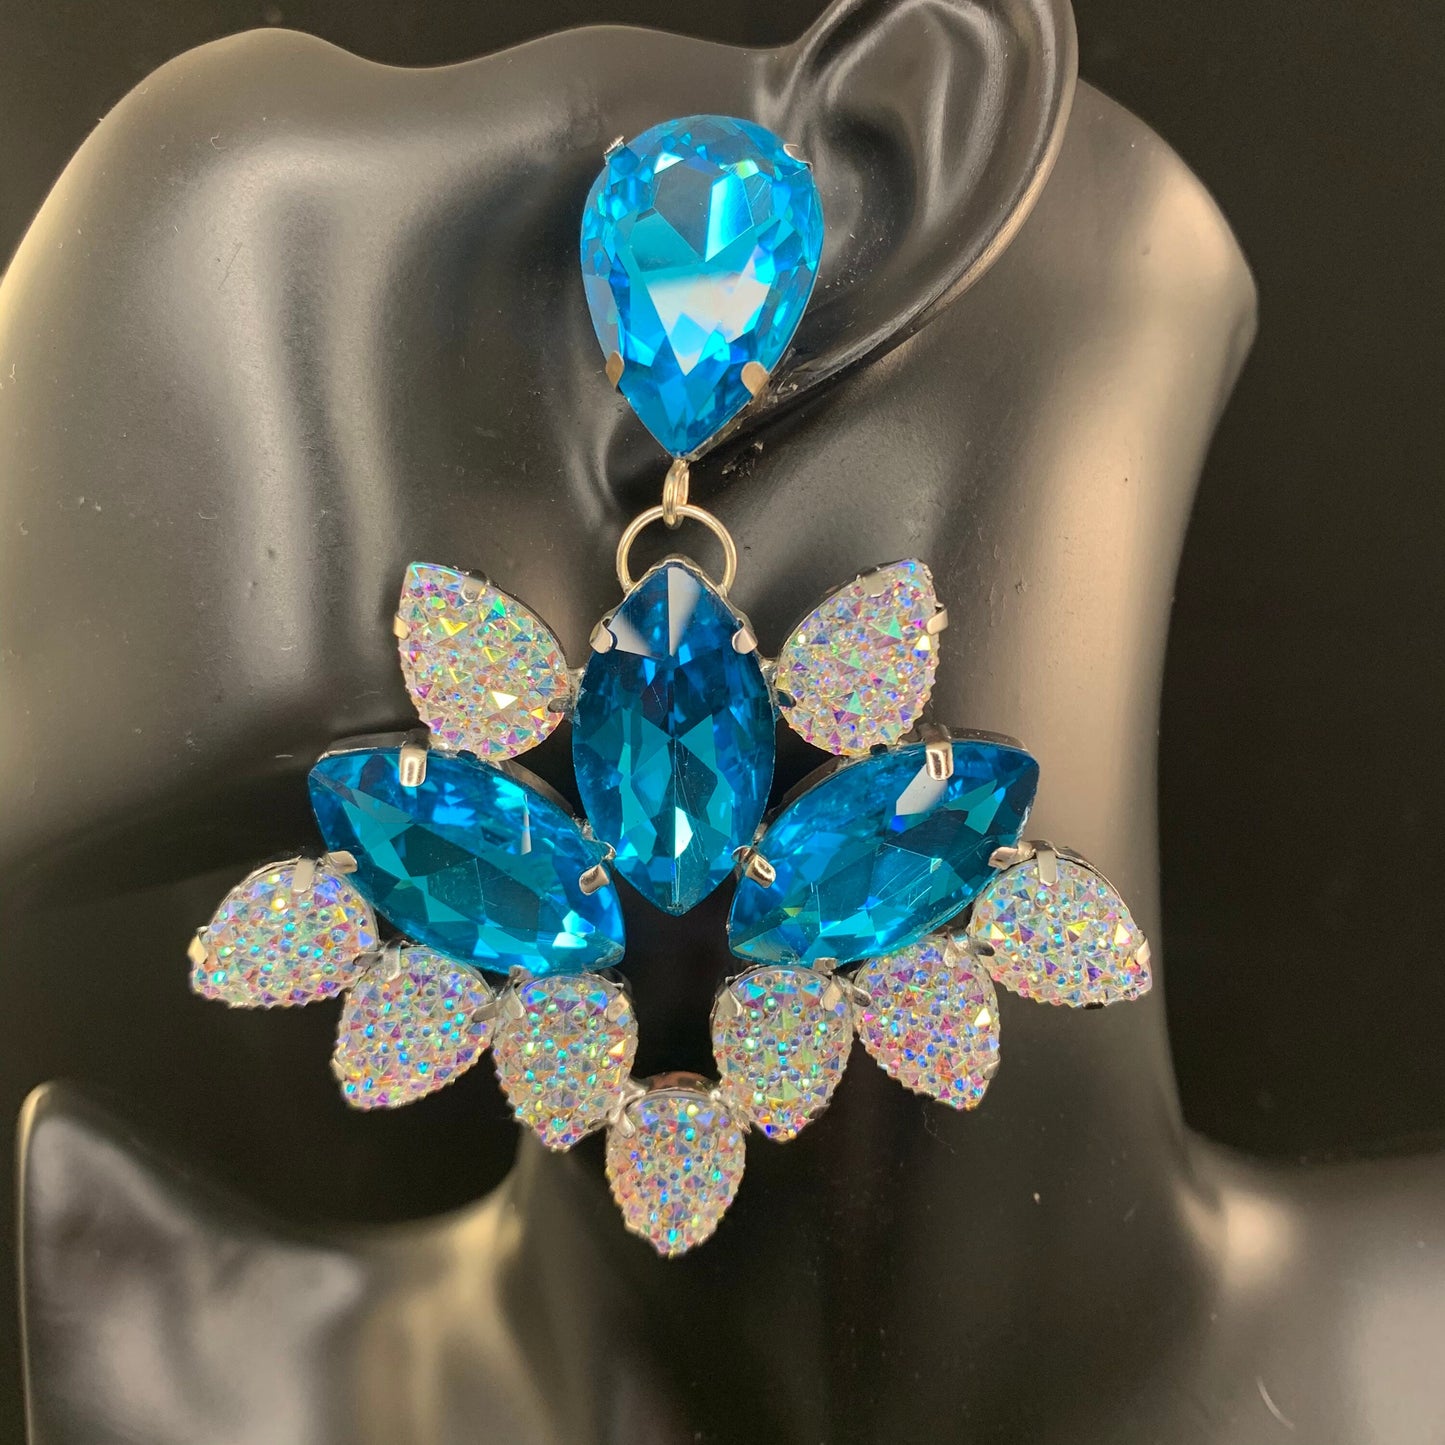 Light Blue and cosmic cluster Earrings / cocktail earrings / little black dress / drag queen / pride